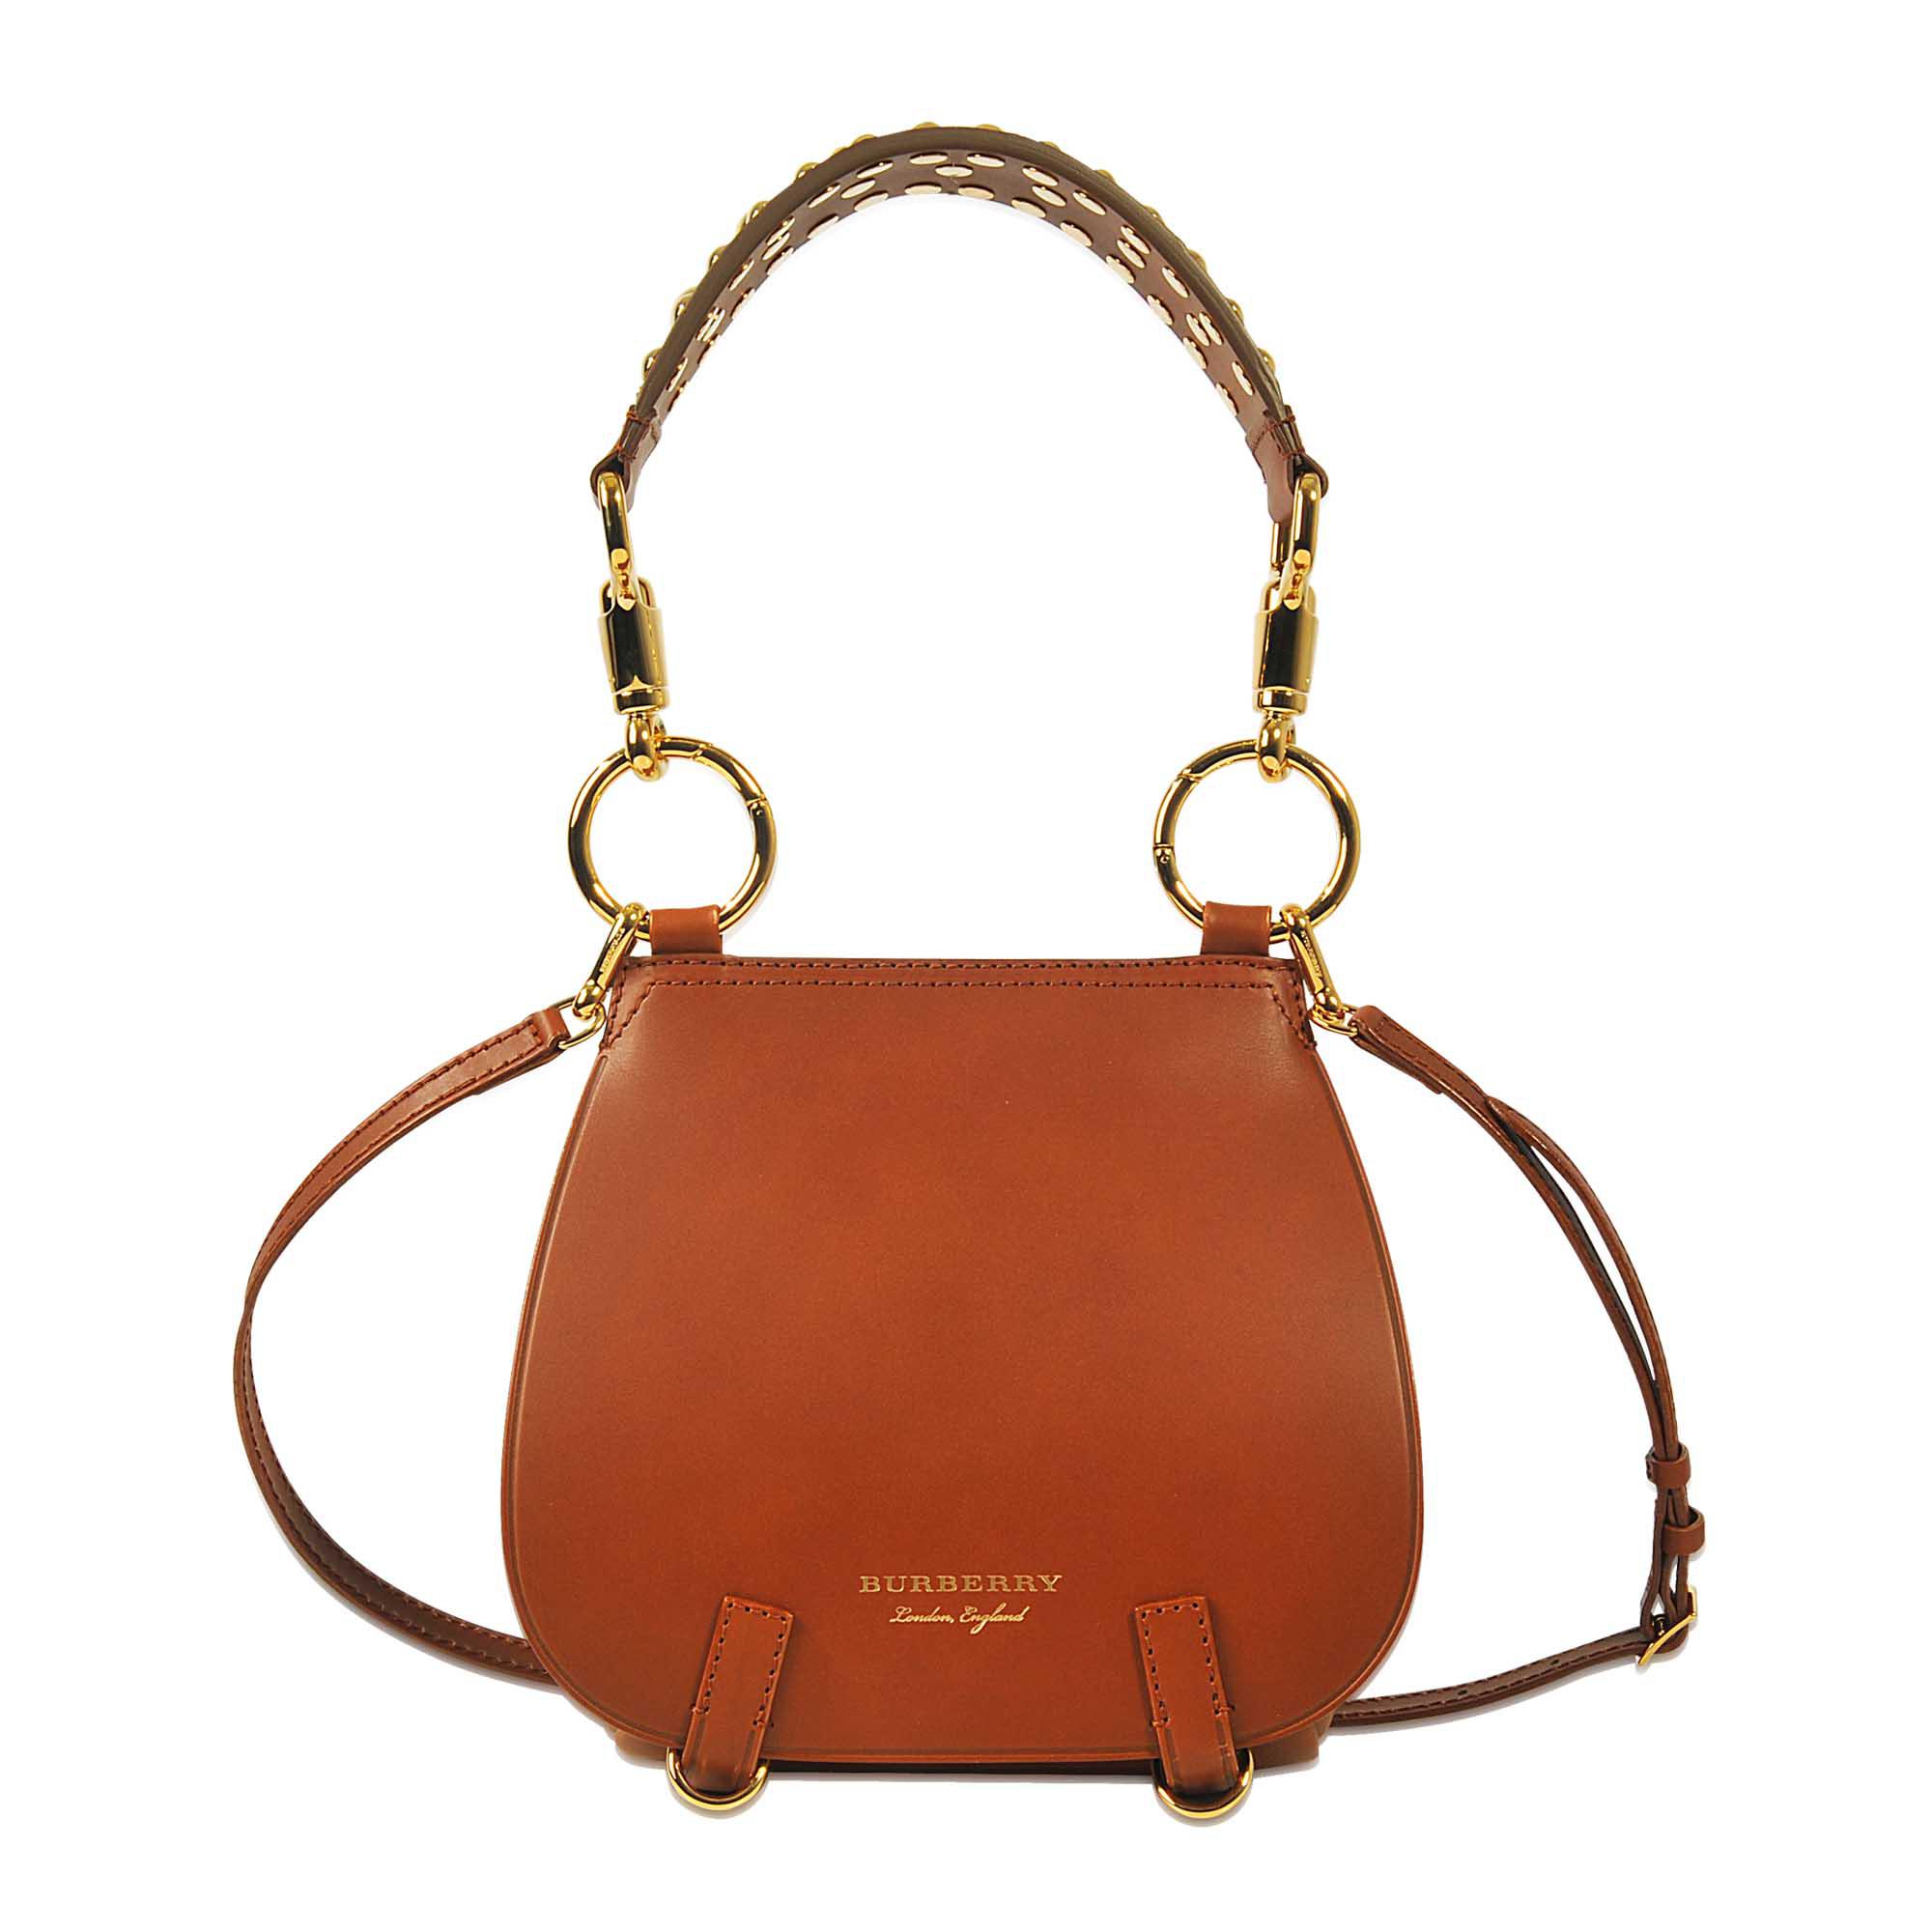 Burberry The Bridle Bag in Leather  Leather handbags, Stylish handbags,  Fashion handbags